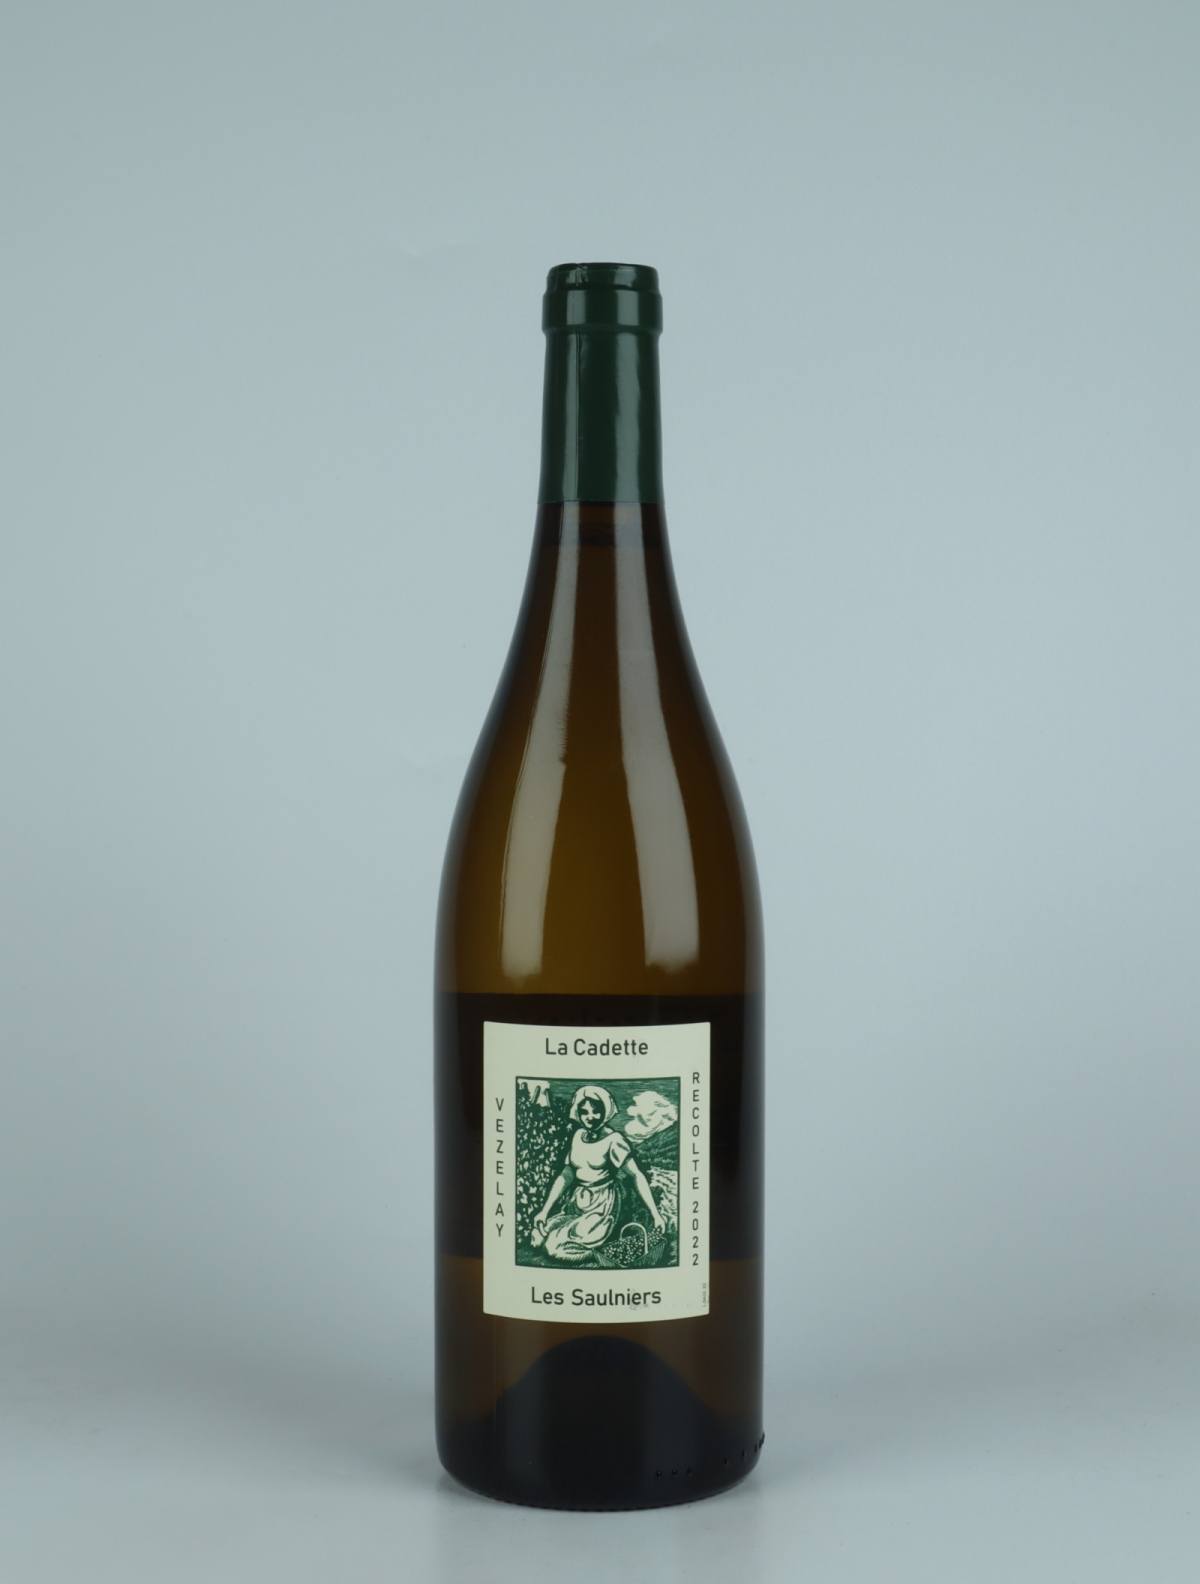 A bottle 2022 Bourgogne Vézelay - Les Saulniers White wine from Domaine de la Cadette, Burgundy in France